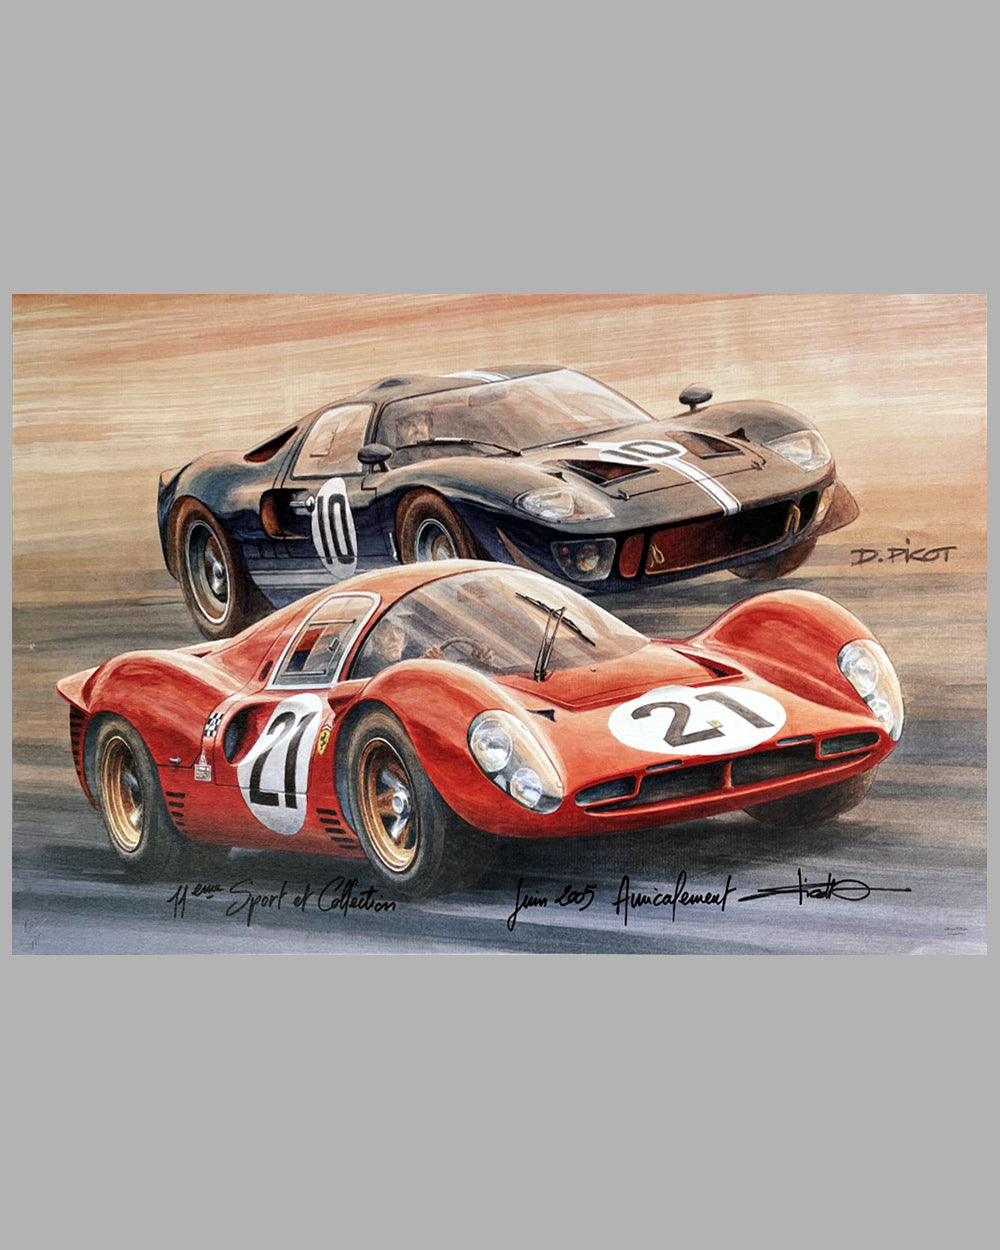 Ferrari vs. Ford print by D. Picot